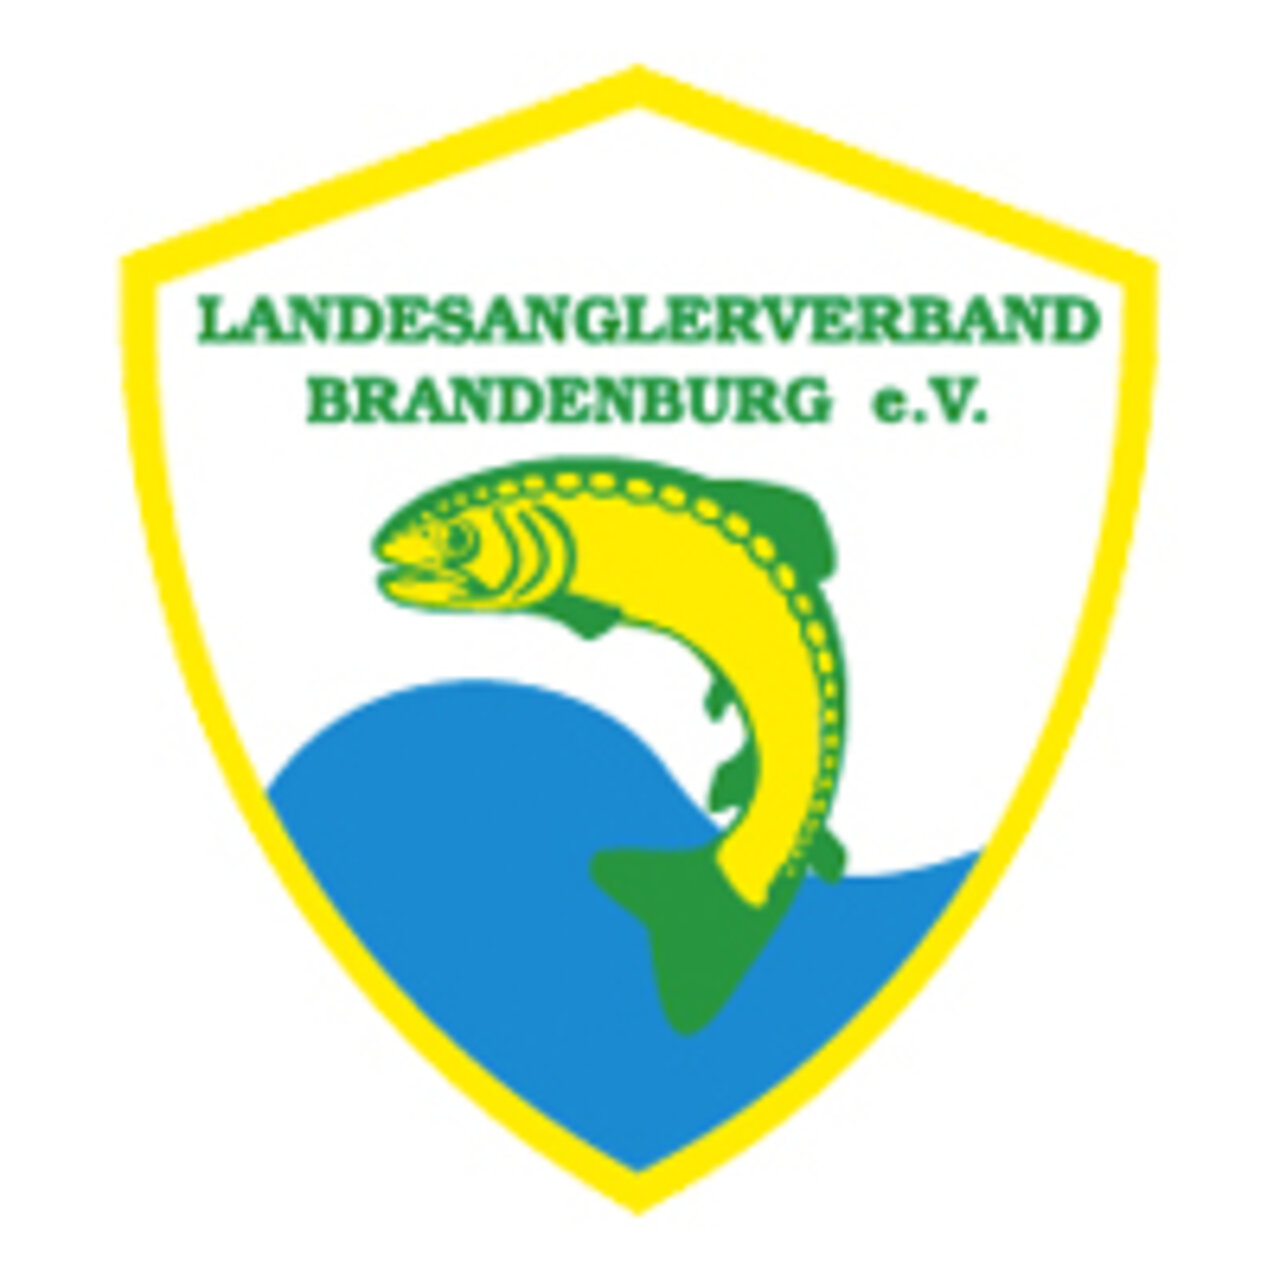 Verbandslogo Landesanglerverband Brandenburg e.V.